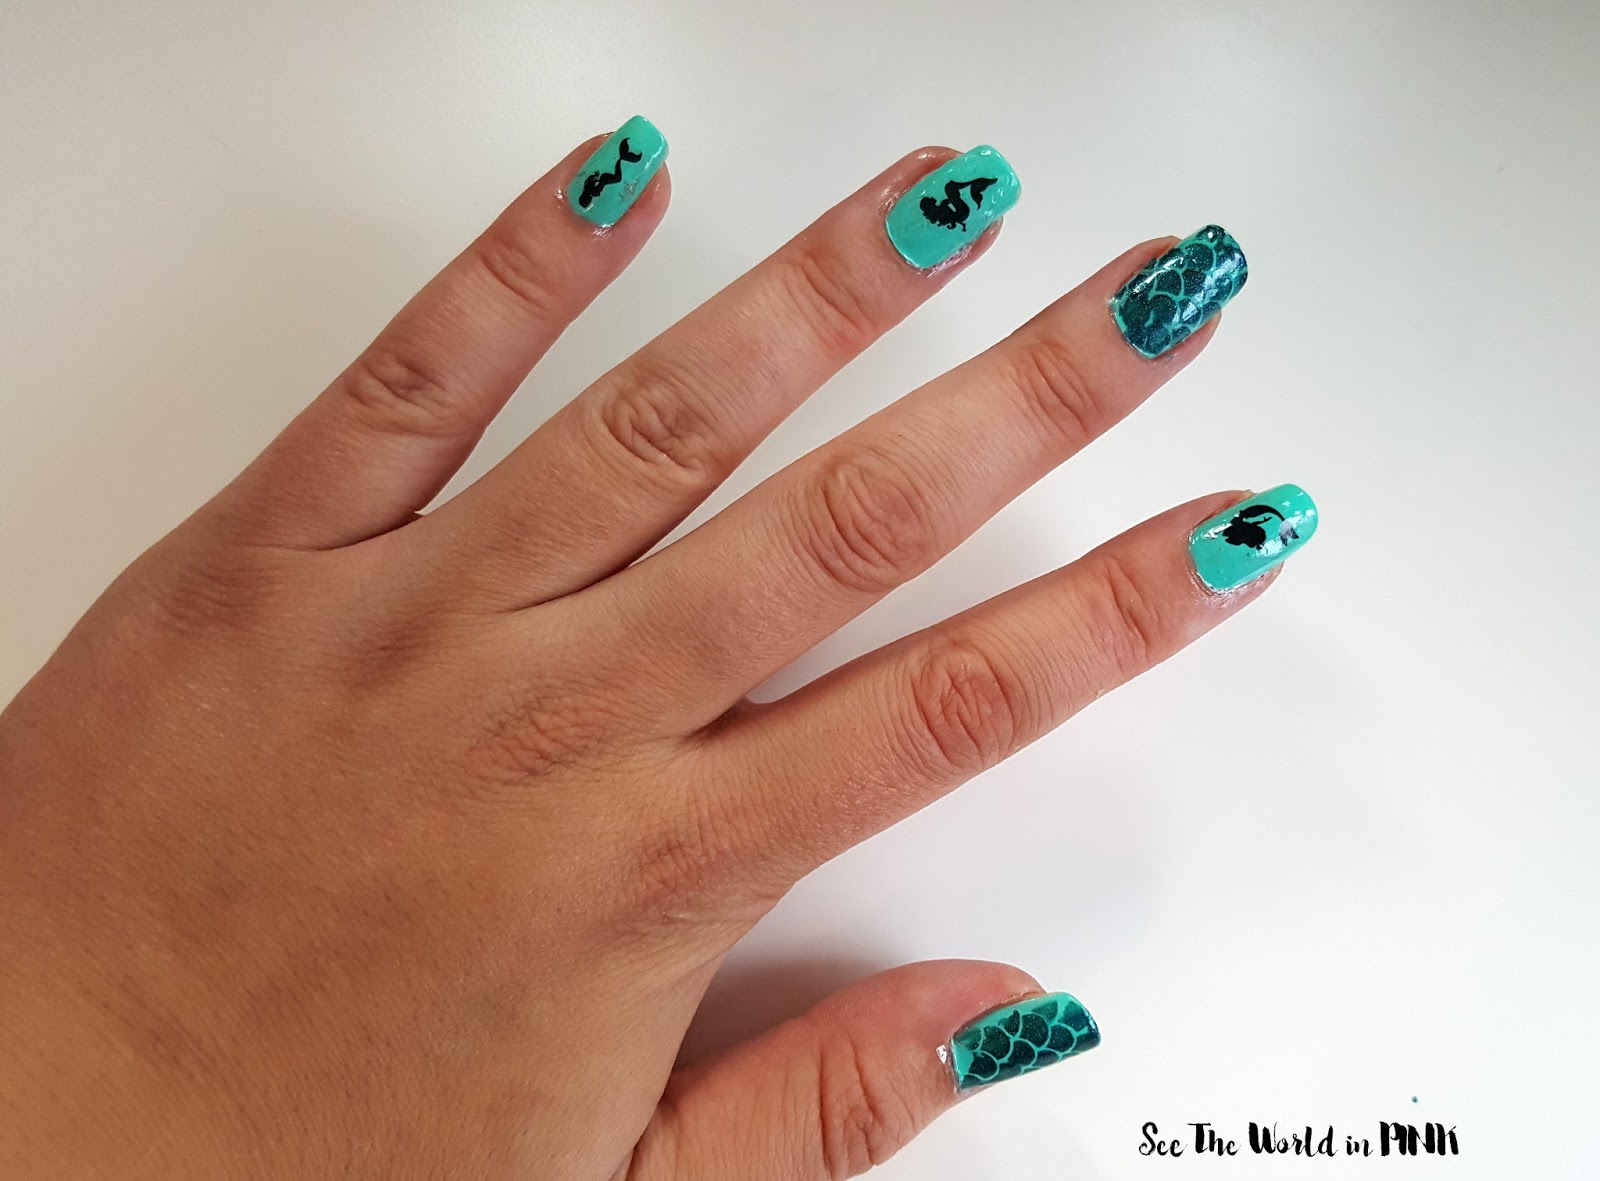 Manicure Monday - Mermaid Nails!